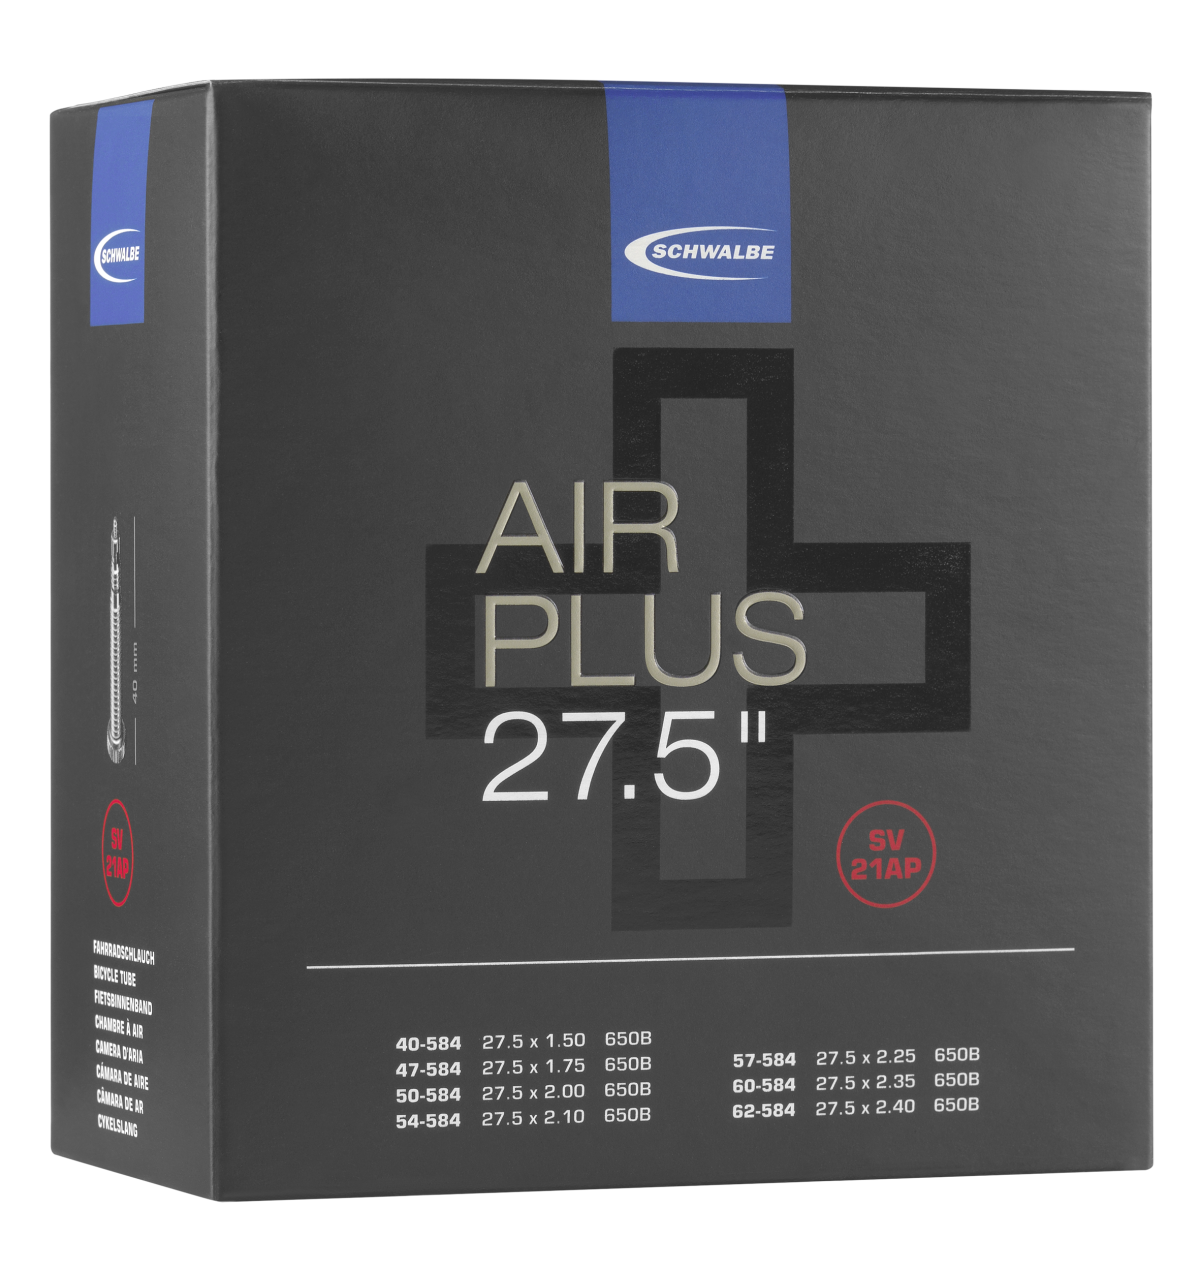 Schwalbe Air Plus Schlauch 27.5" No. 21AP (SV21AP, AV21AP)